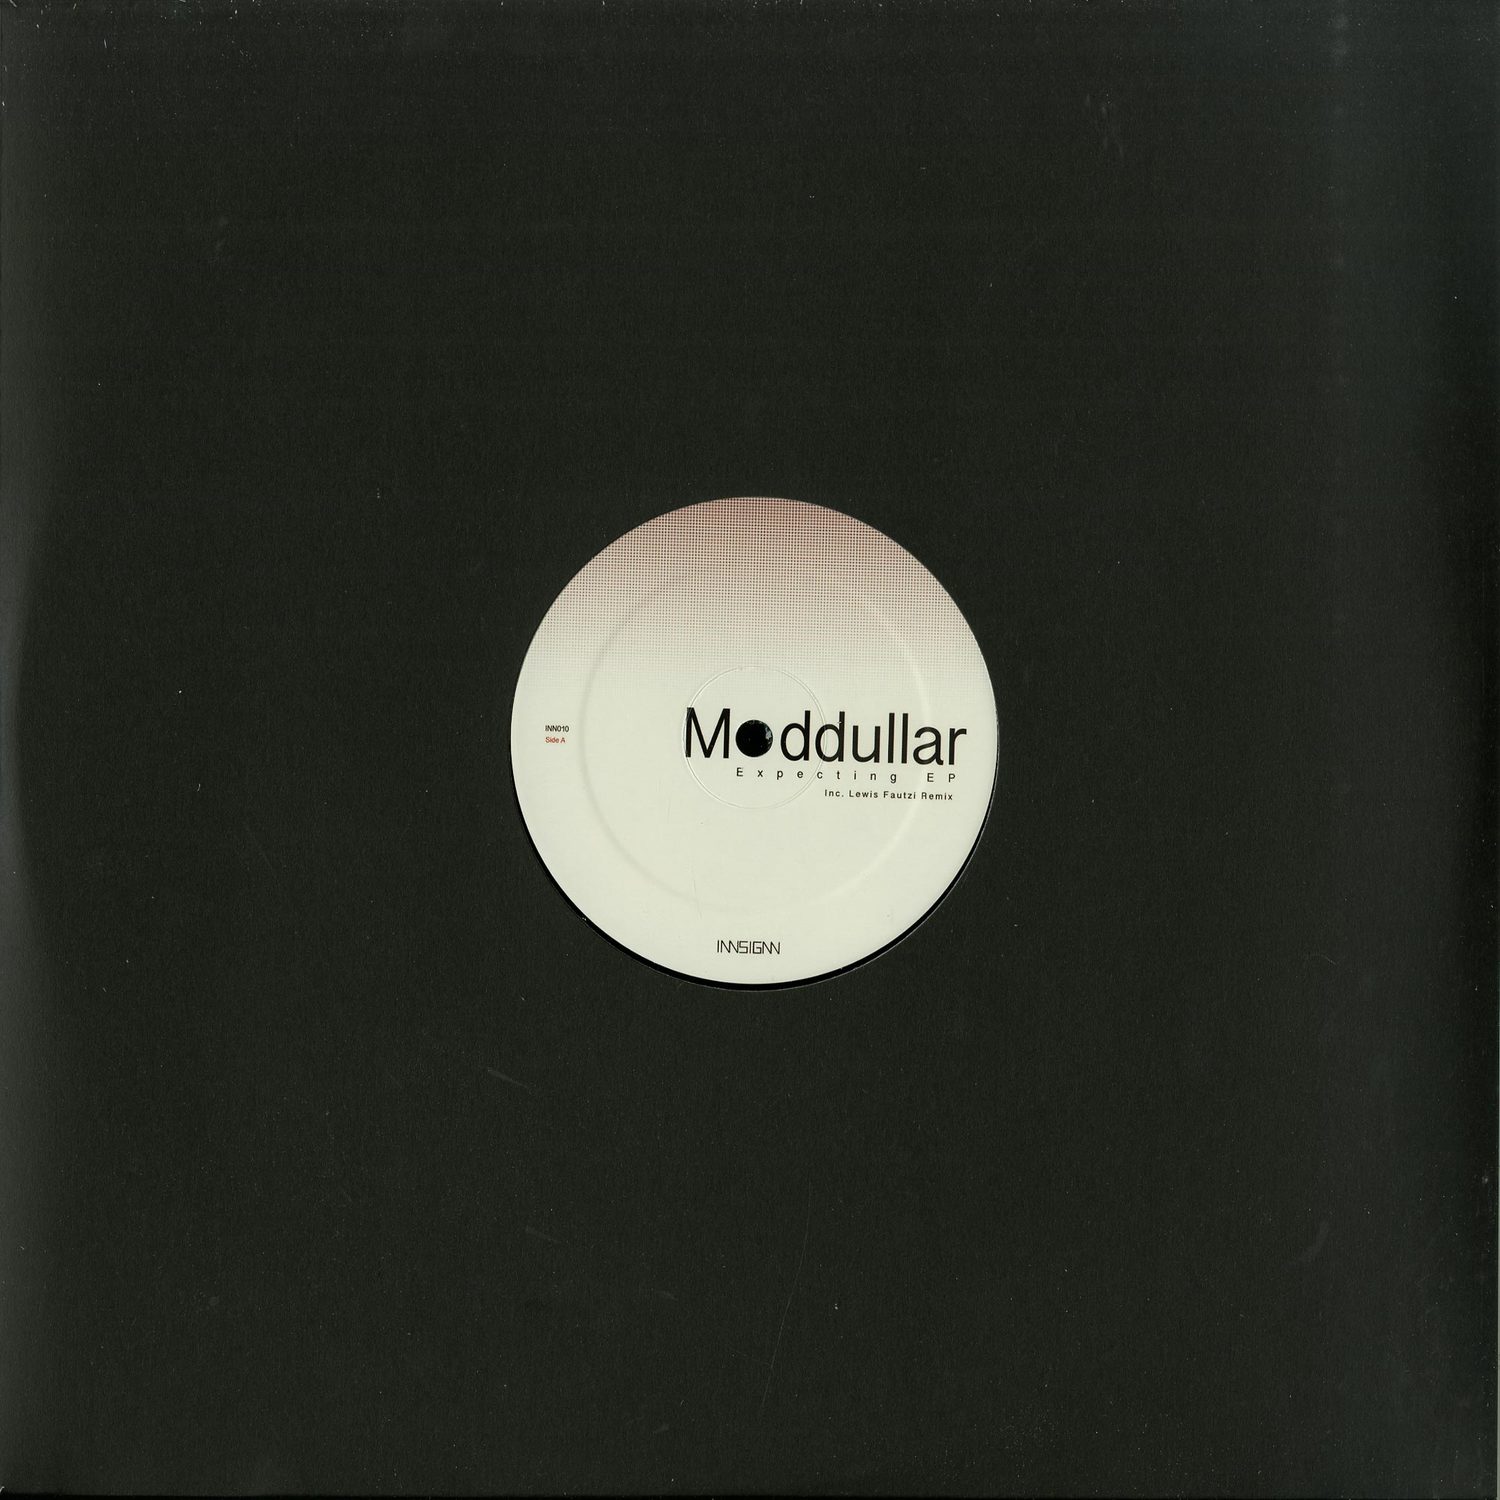 Moddullar - EXPECTING EP